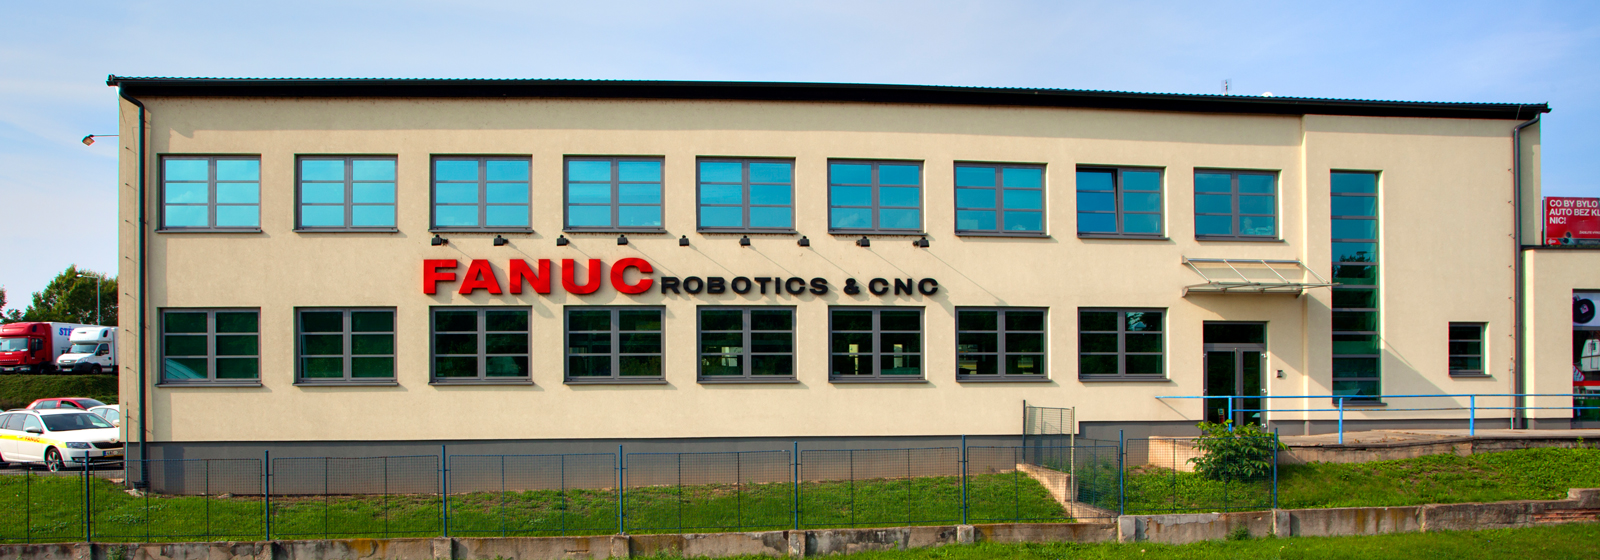 FANUC Czech building